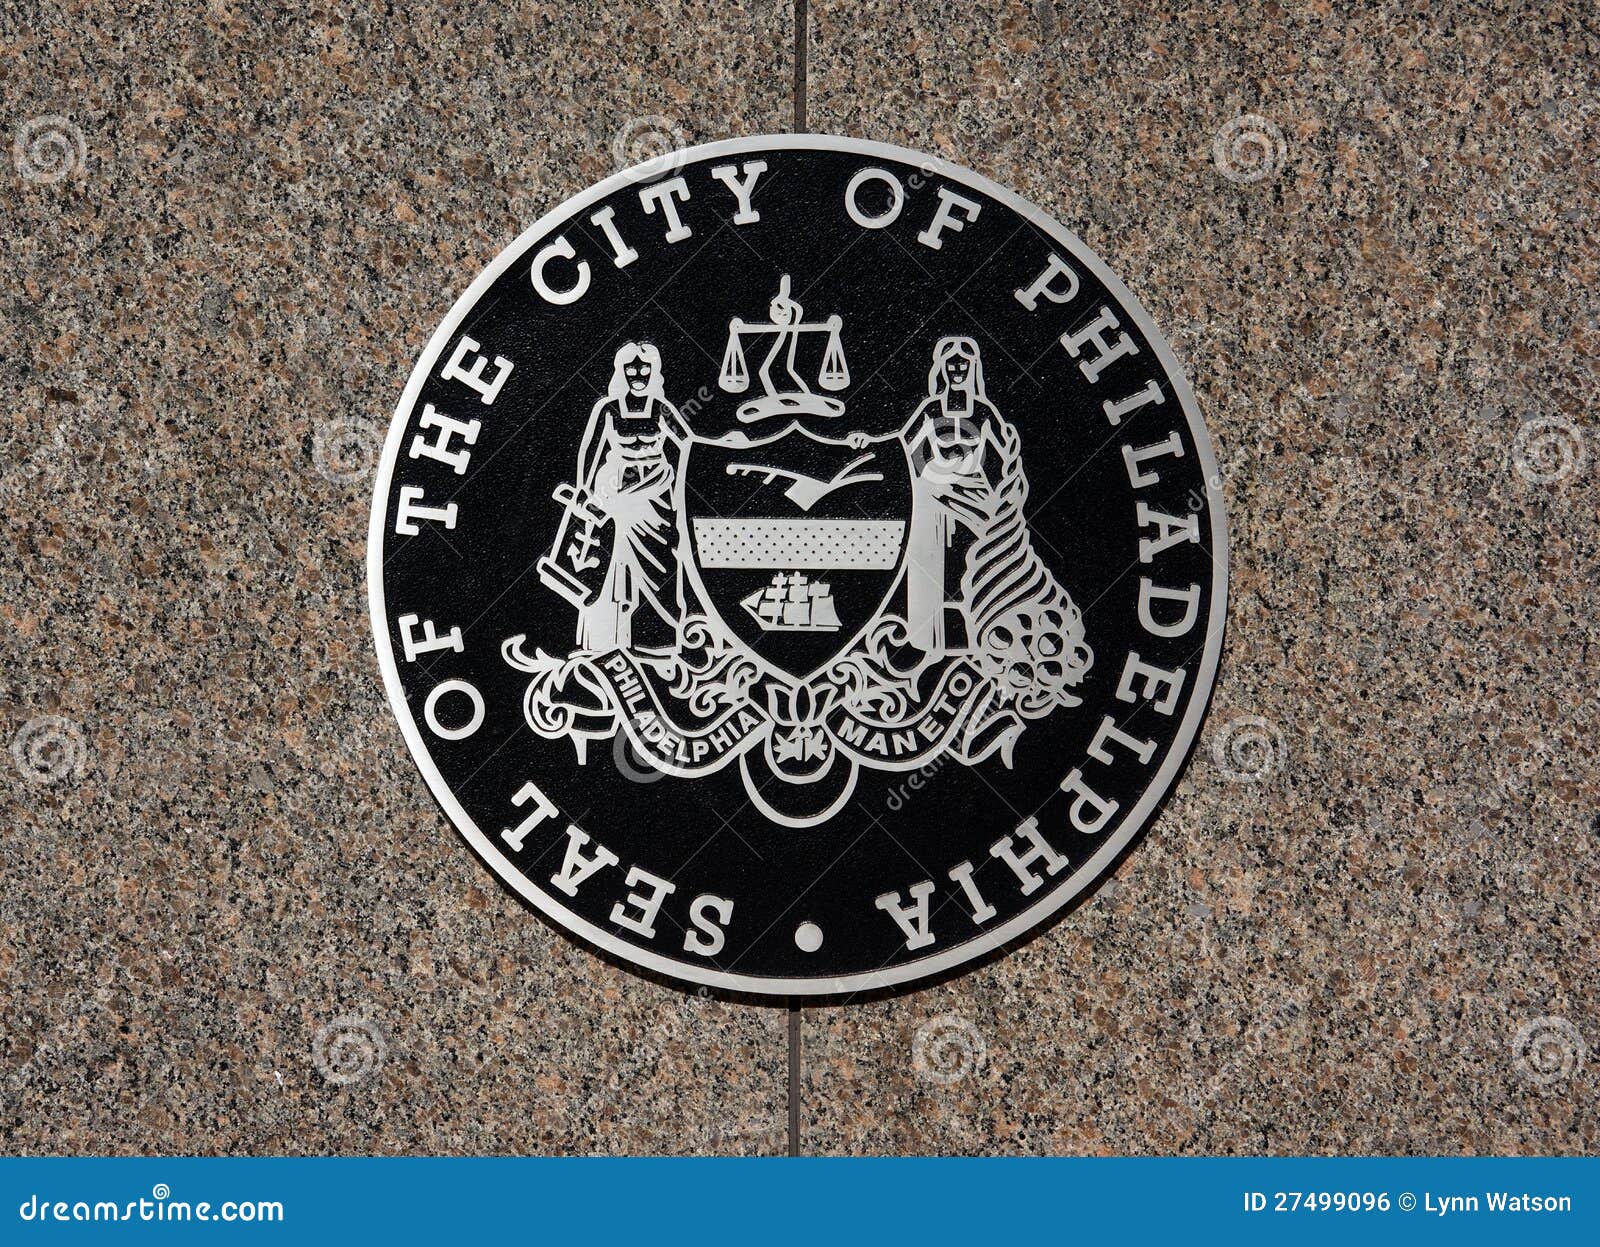 city of philadelphia seal